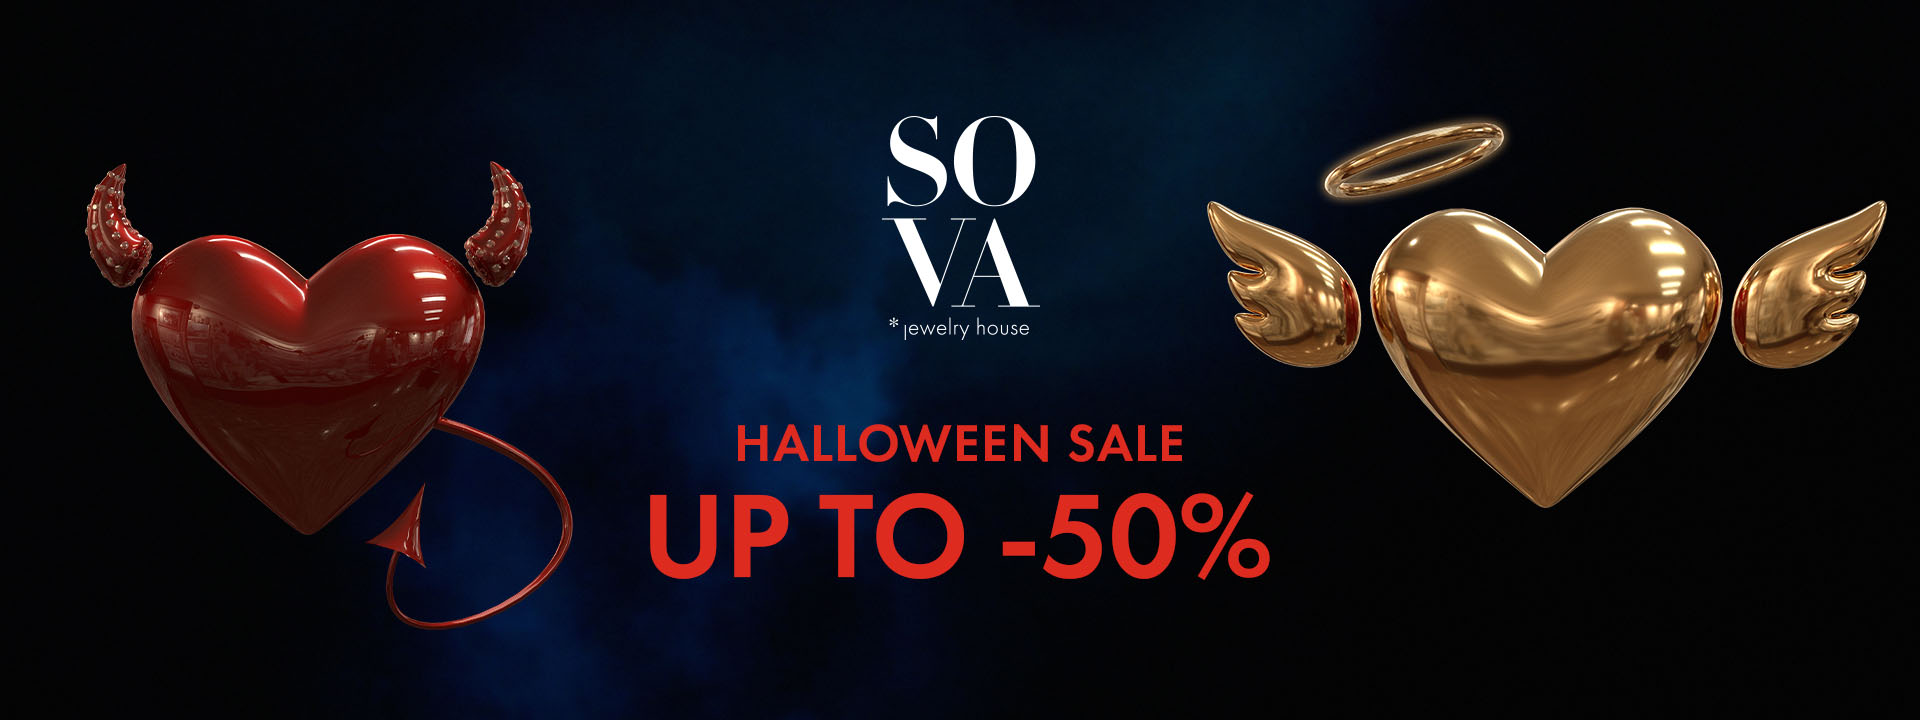 Halloween Sale в 
SOVA